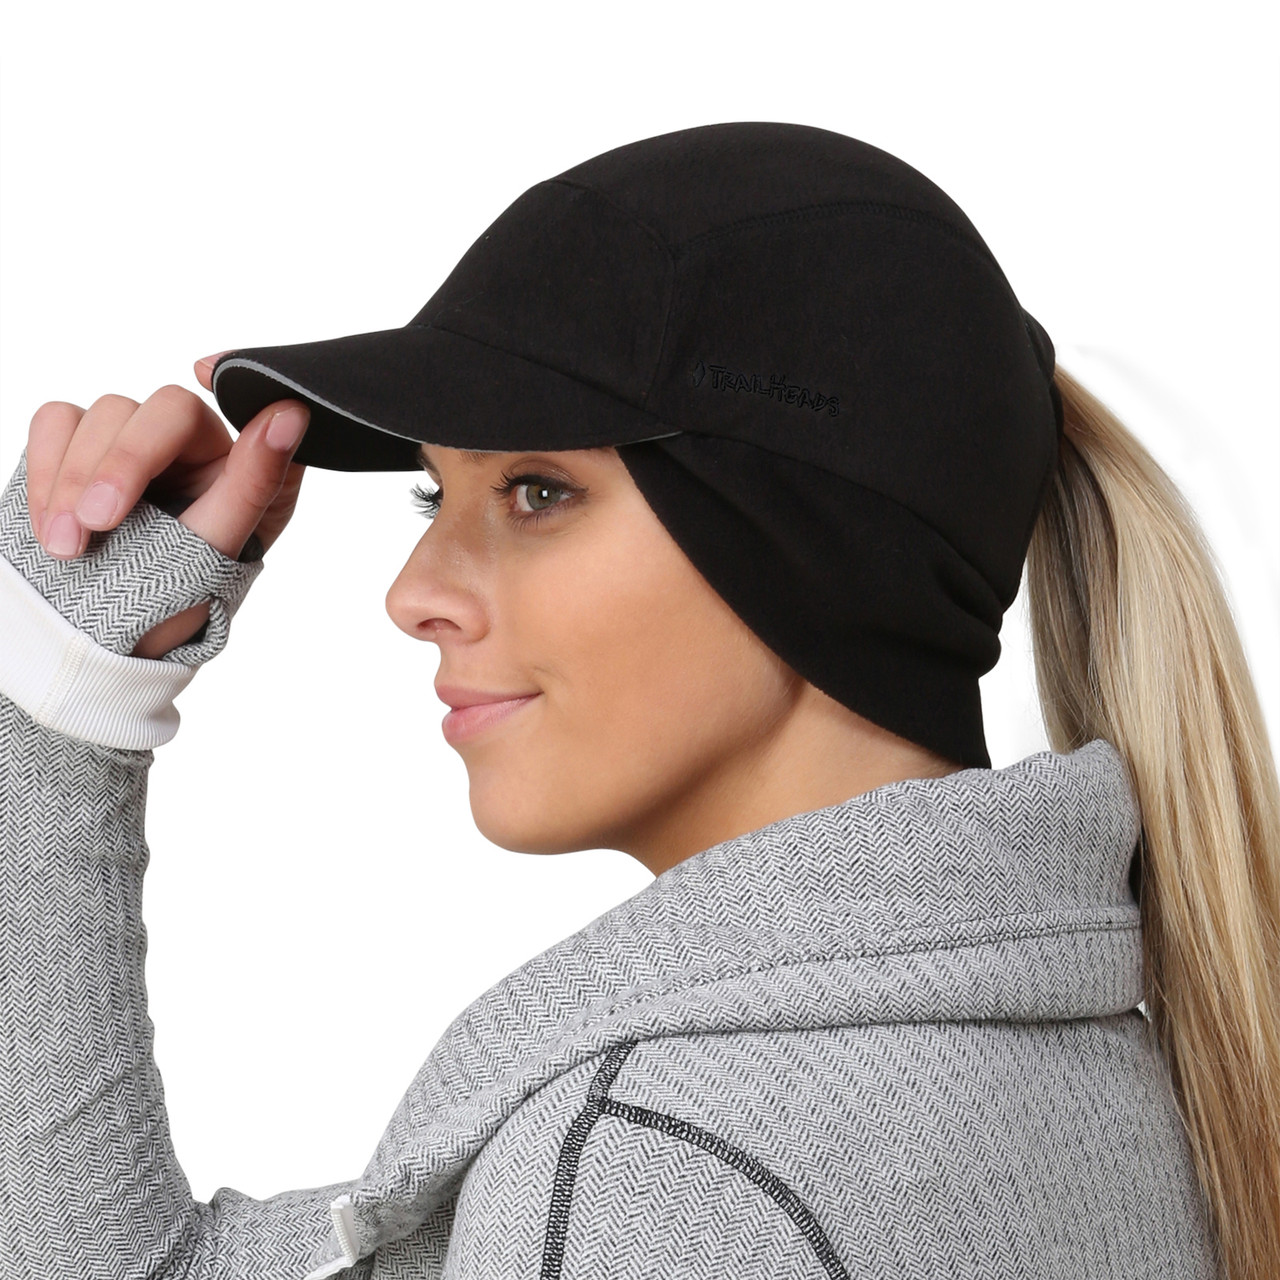 TrailHeads Trailblazer Ponytail Hat for Women - Black